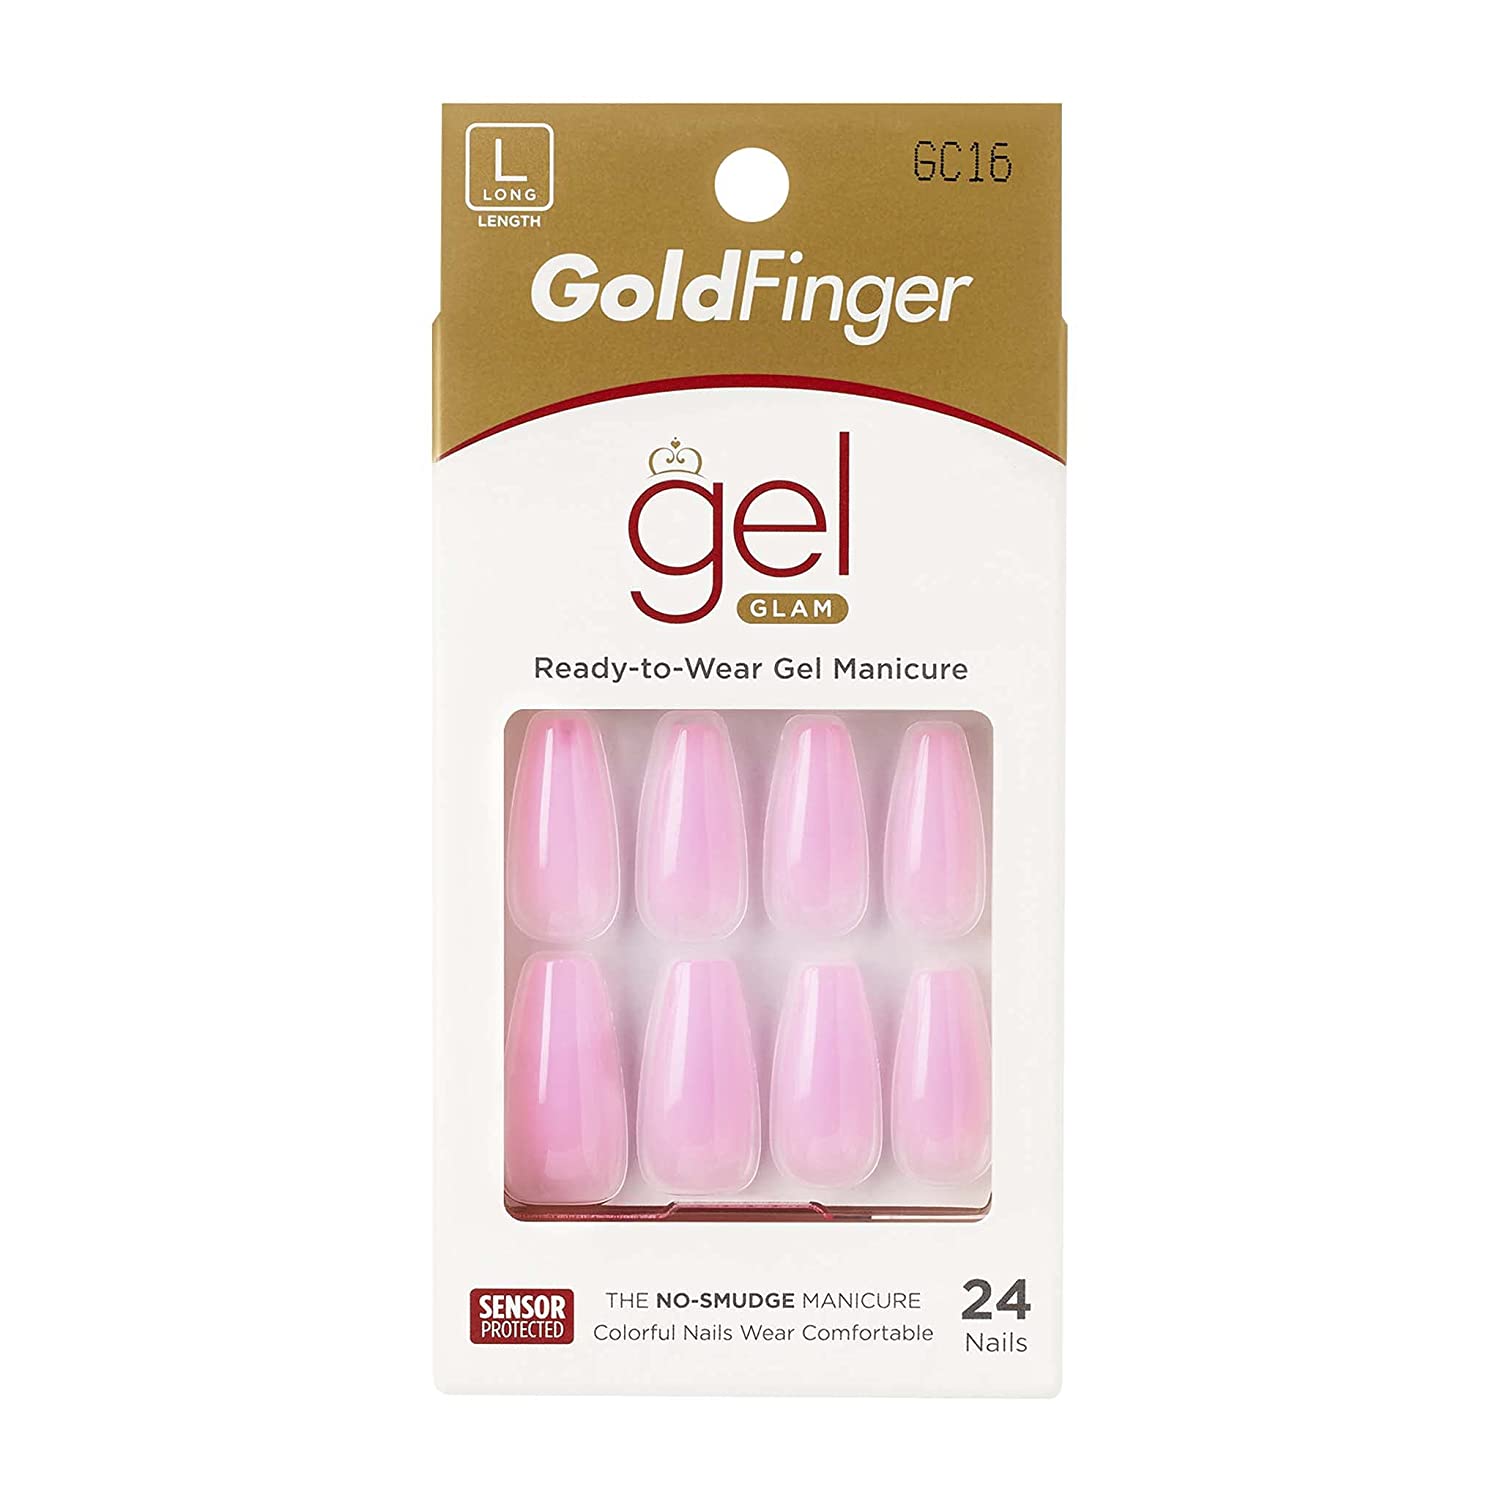 Kiss GoldFinger Gel Glam Ready-to-Wear Gel Manicure (GC16)